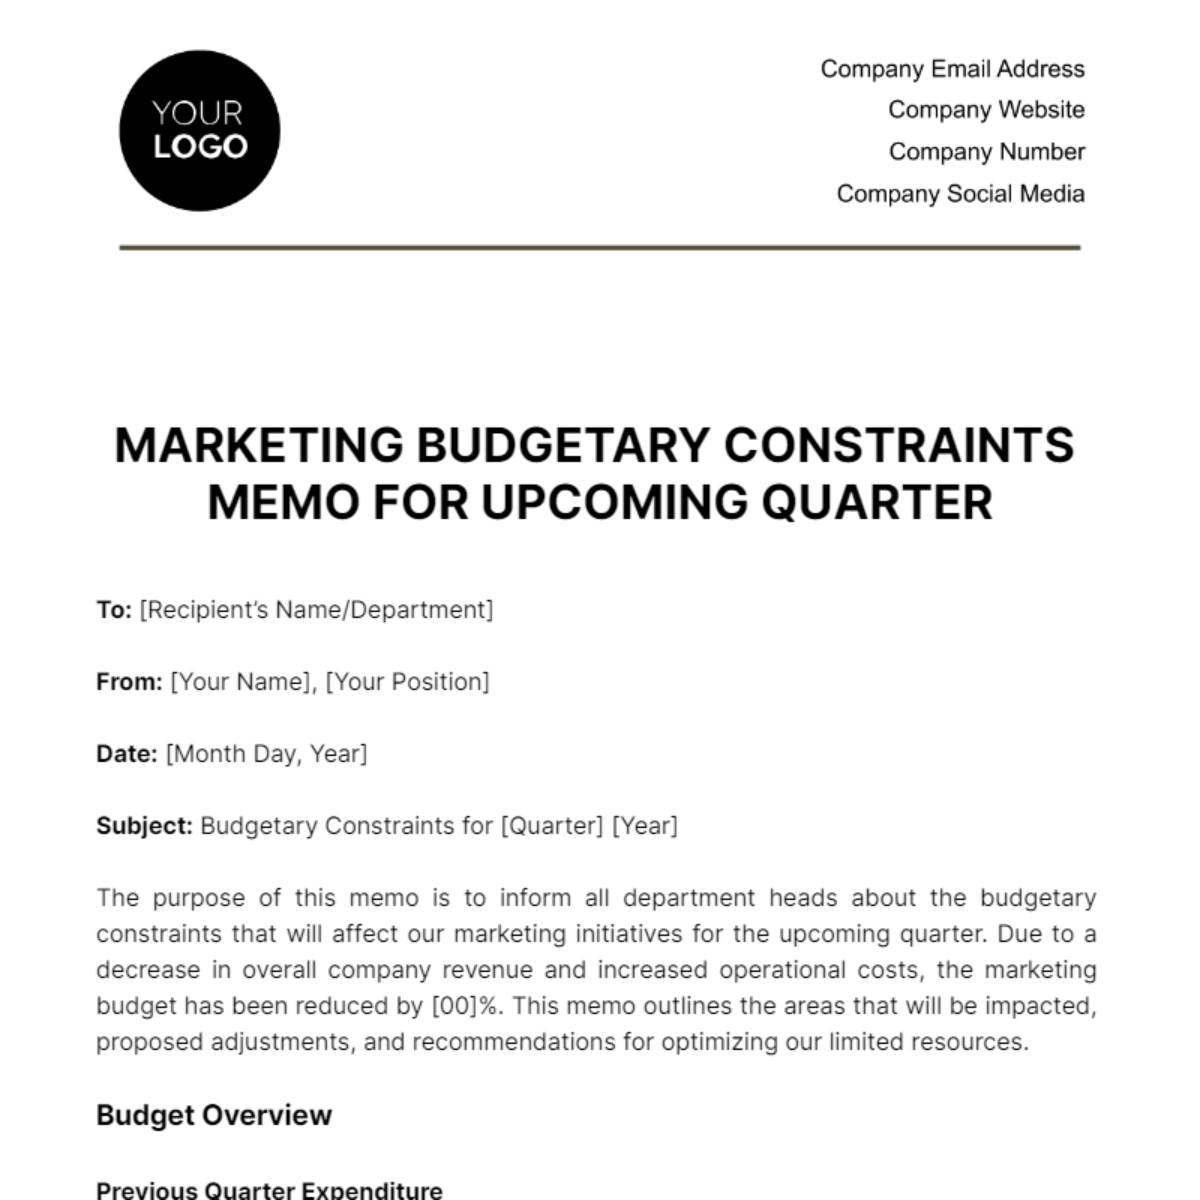 Free Marketing Budgetary Constraints Memo for Upcoming Quarter Template